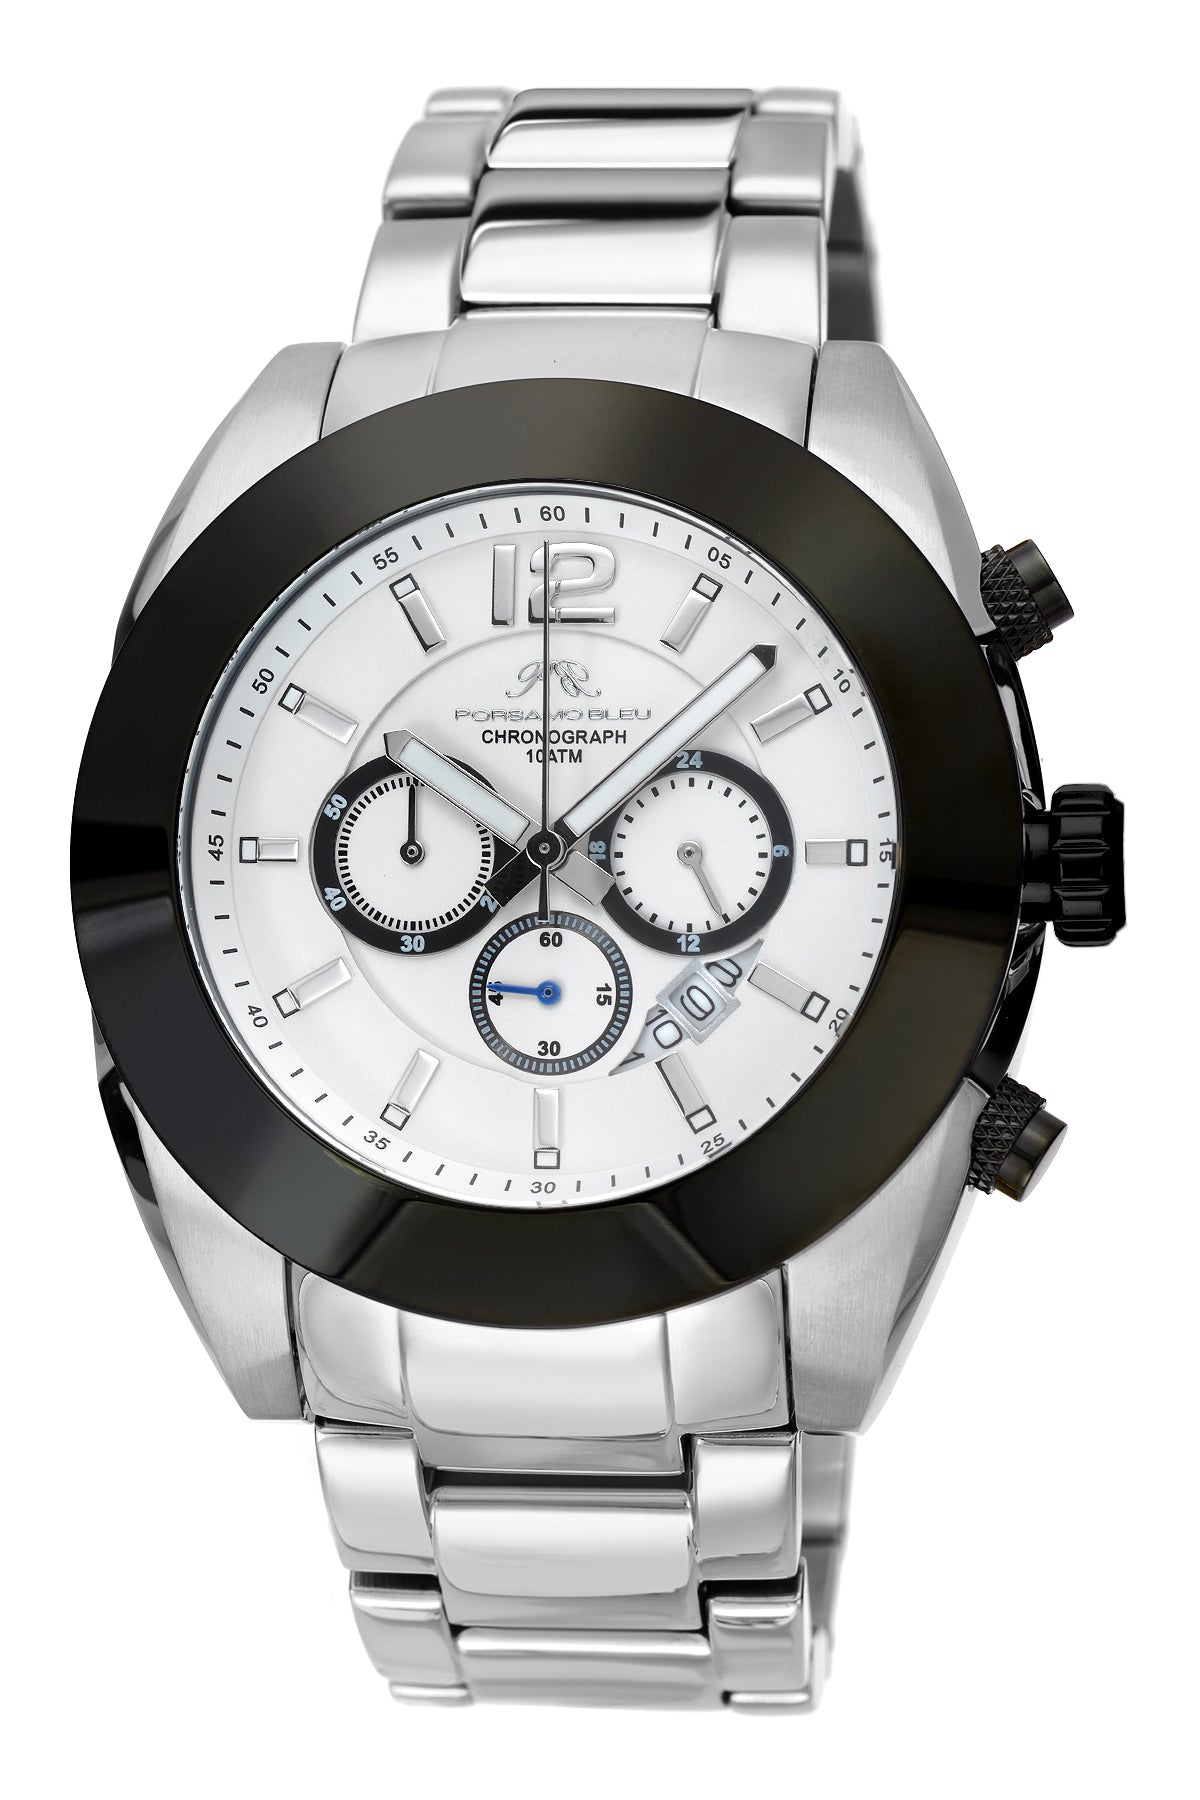 Porsamo Bleu Pascal luxury chronograph men's stainless steel watch, silver, black 261CPAS